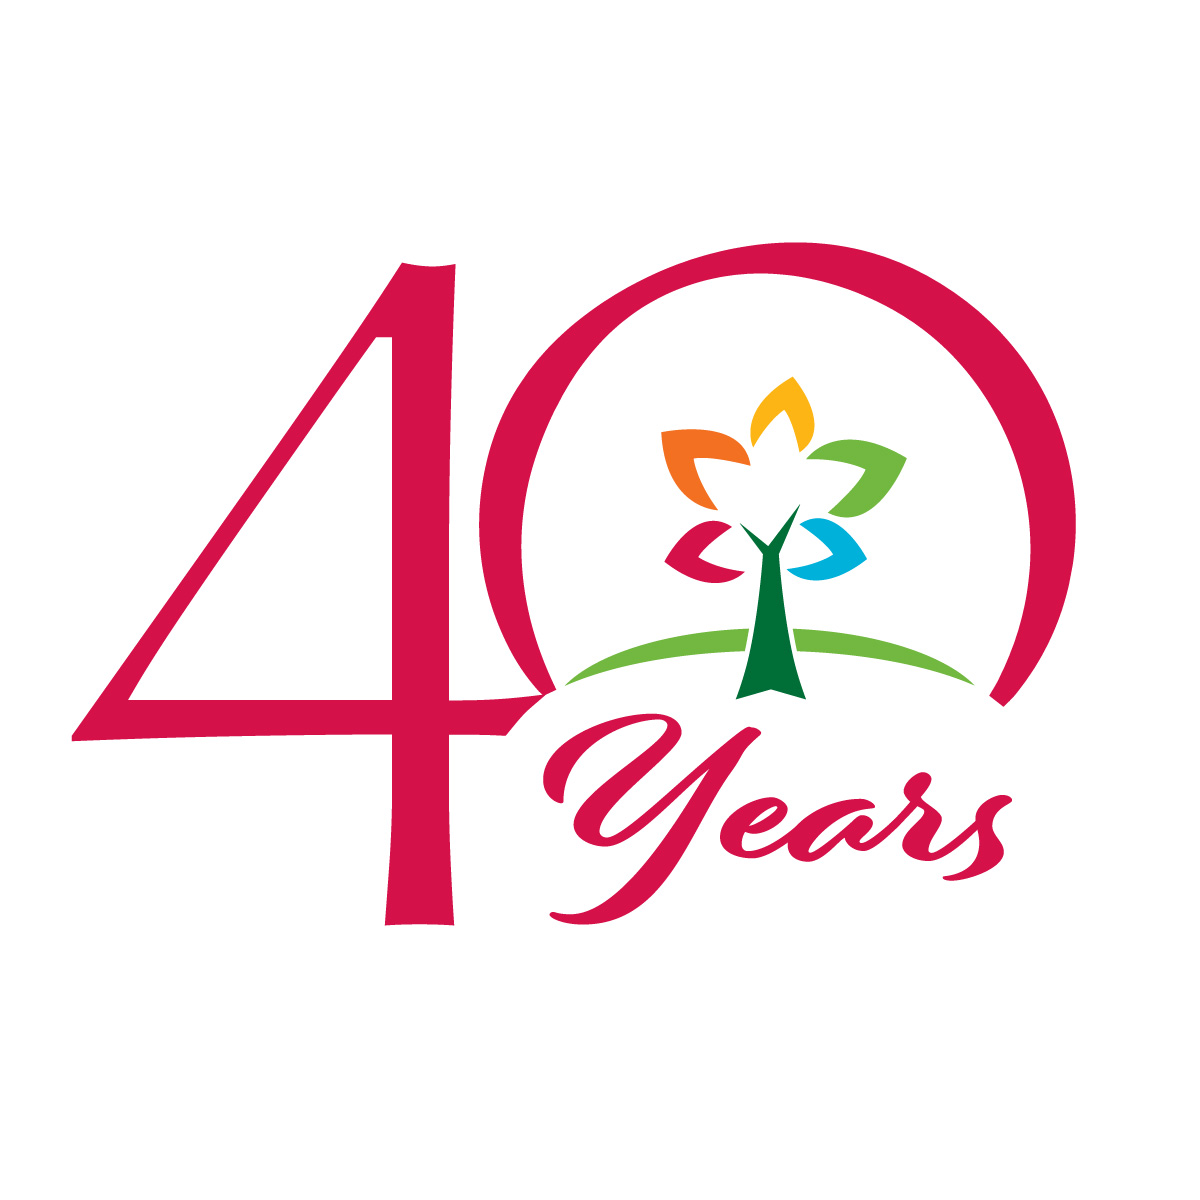 Covenant Village 40th Anniversary logo